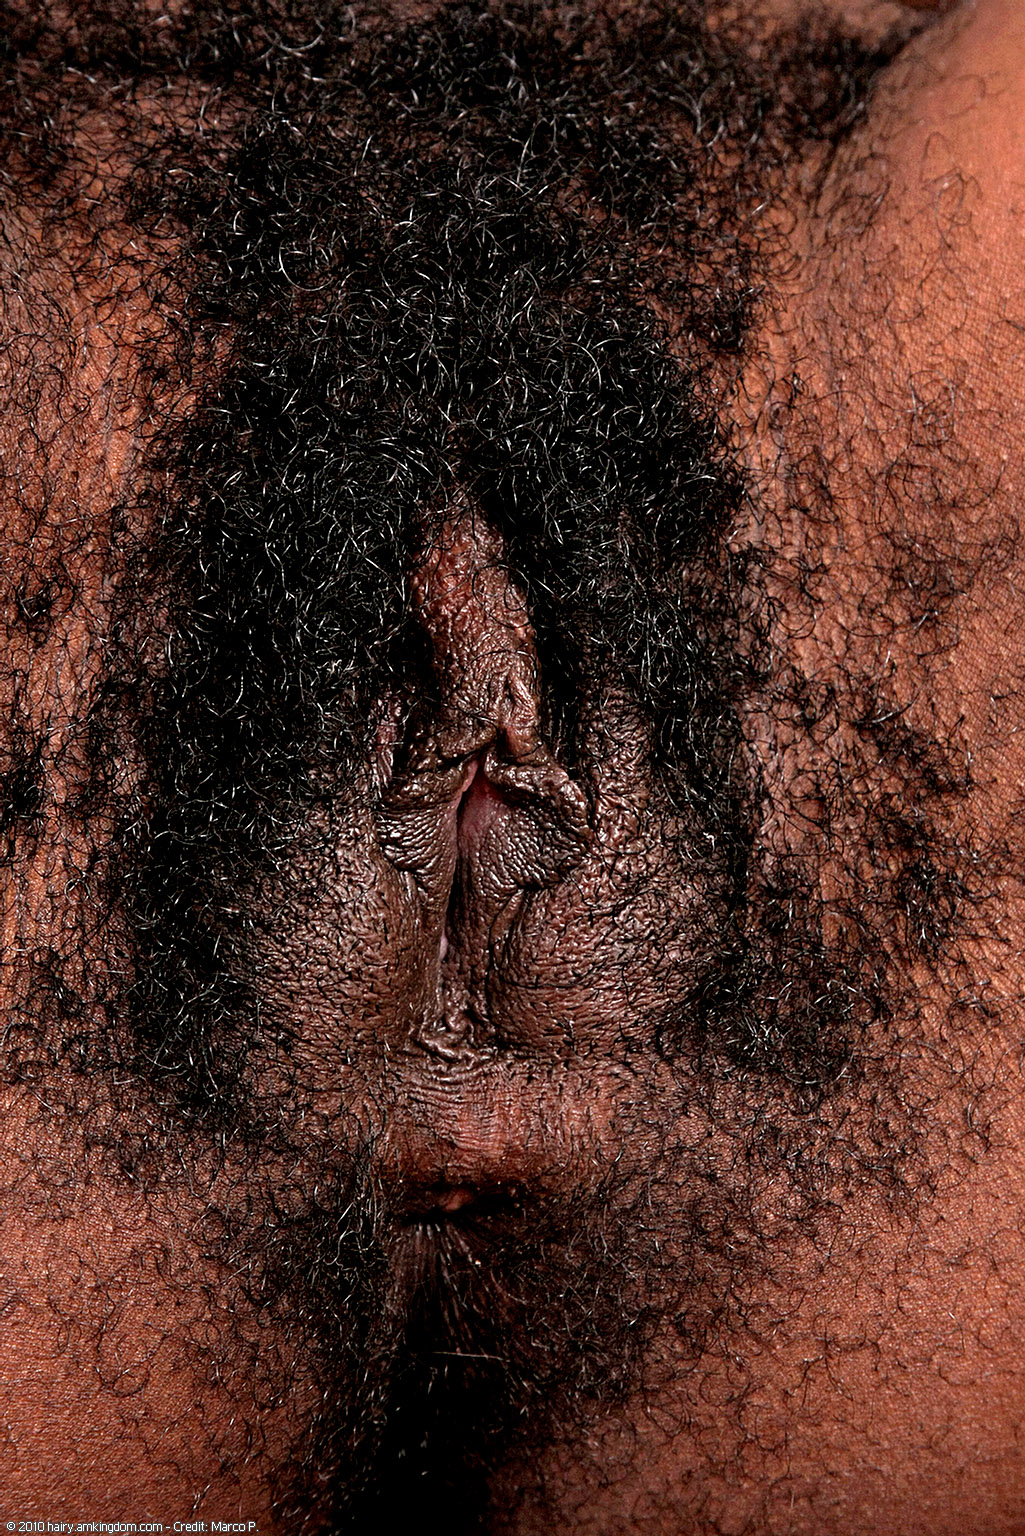 Jordan Atk Natural Hairy « ATK Natural And Hairy « Free ATK Pictures @ Bravo ATK